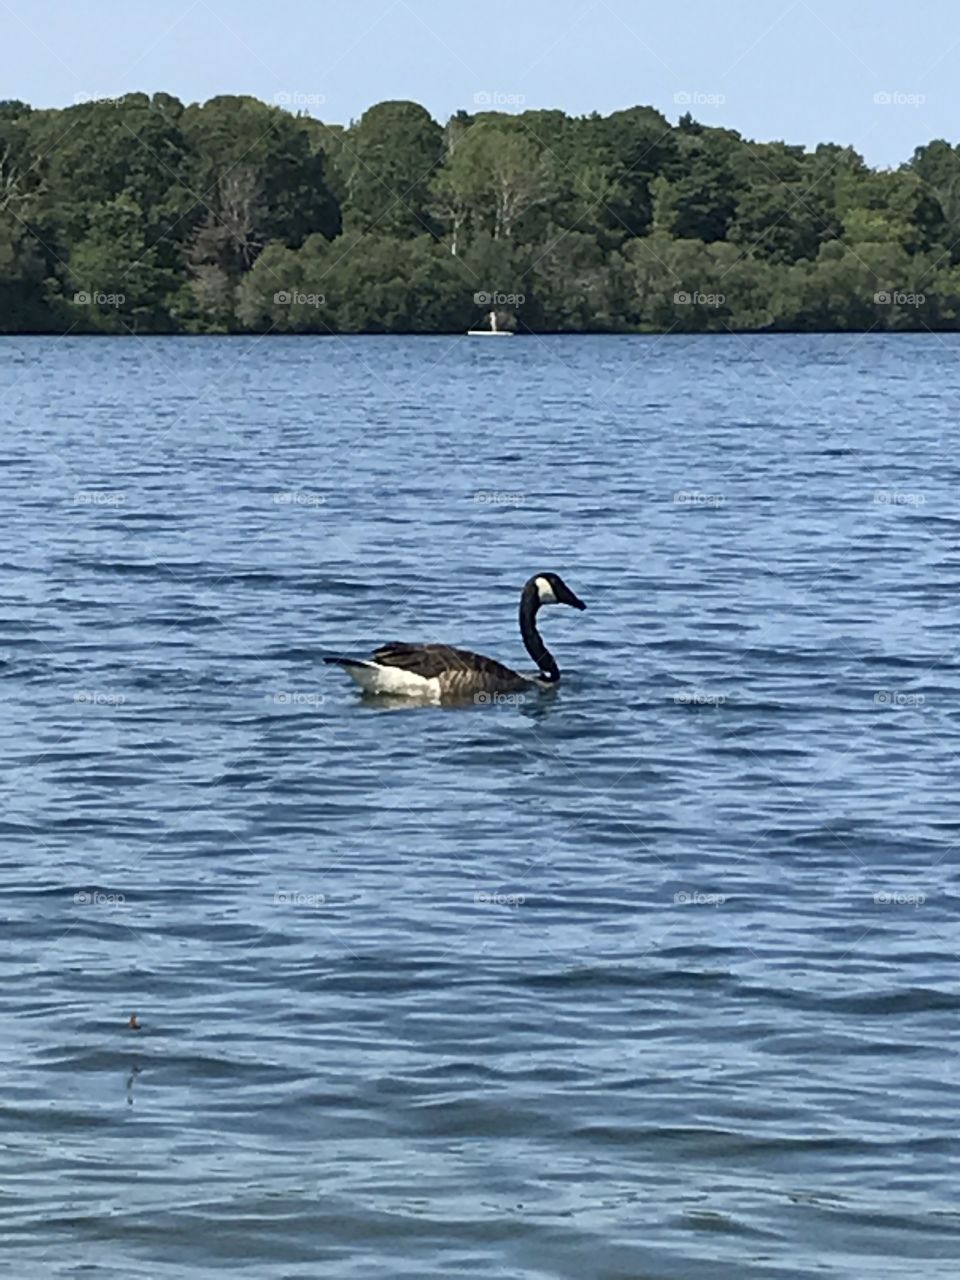 A Canadian goose.